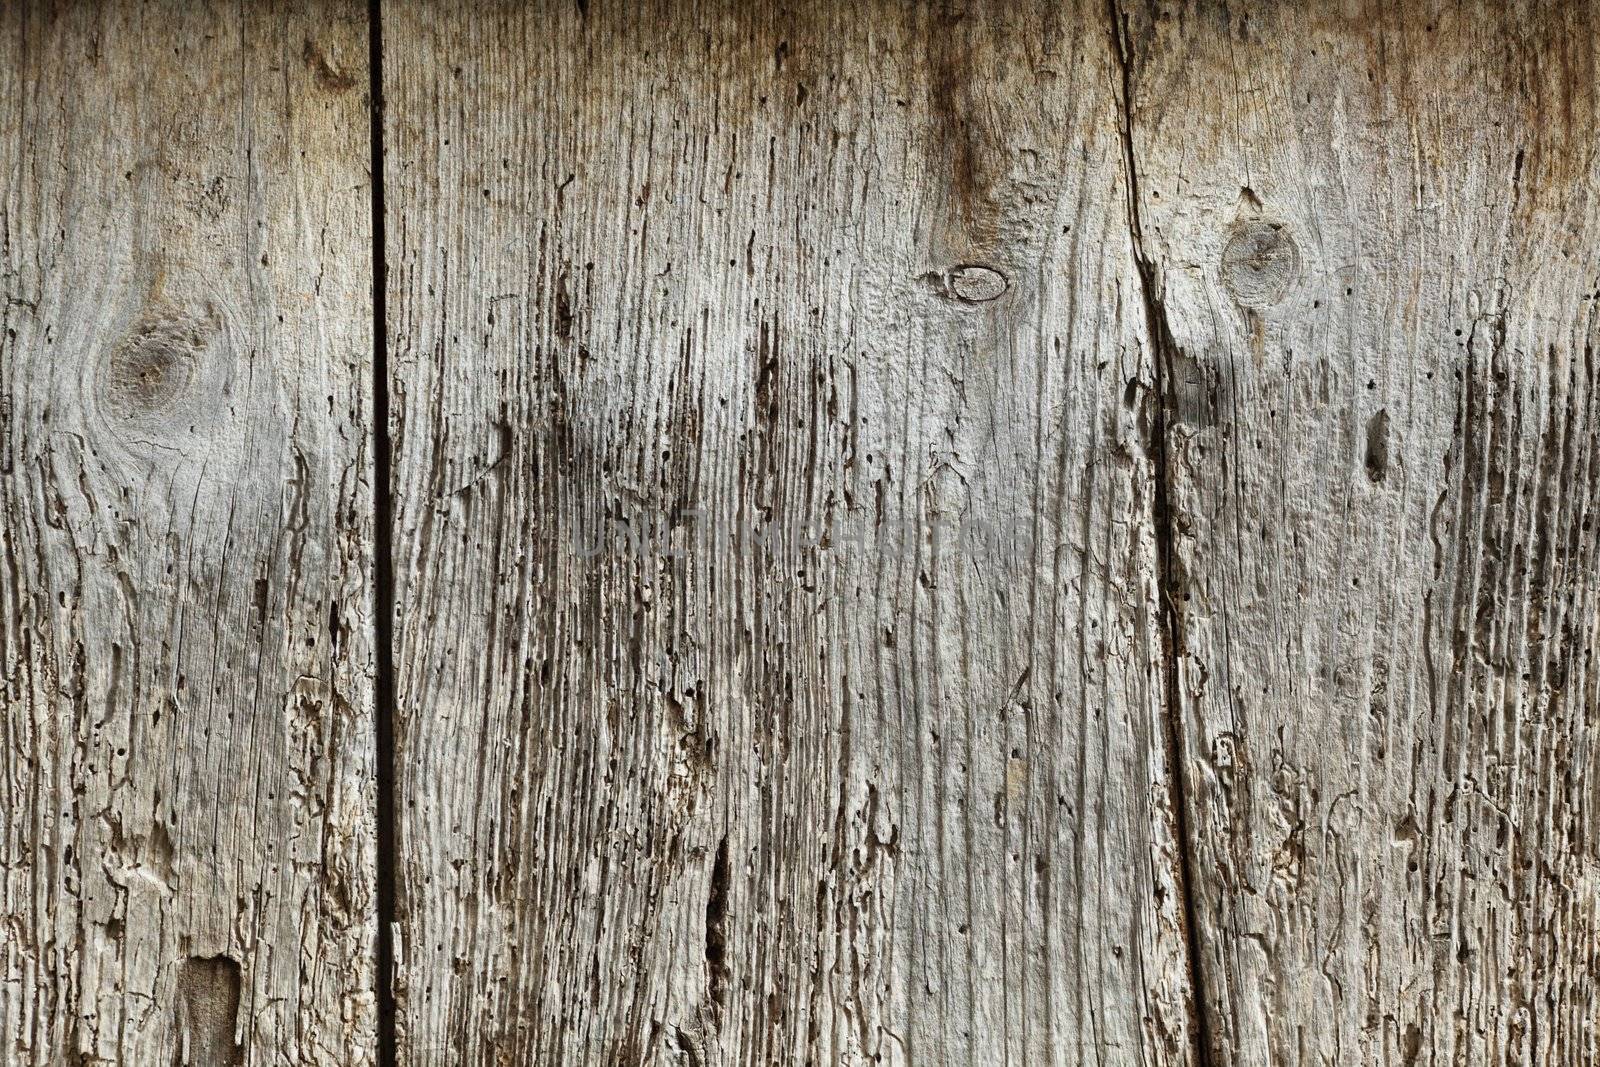 natural wooden texture